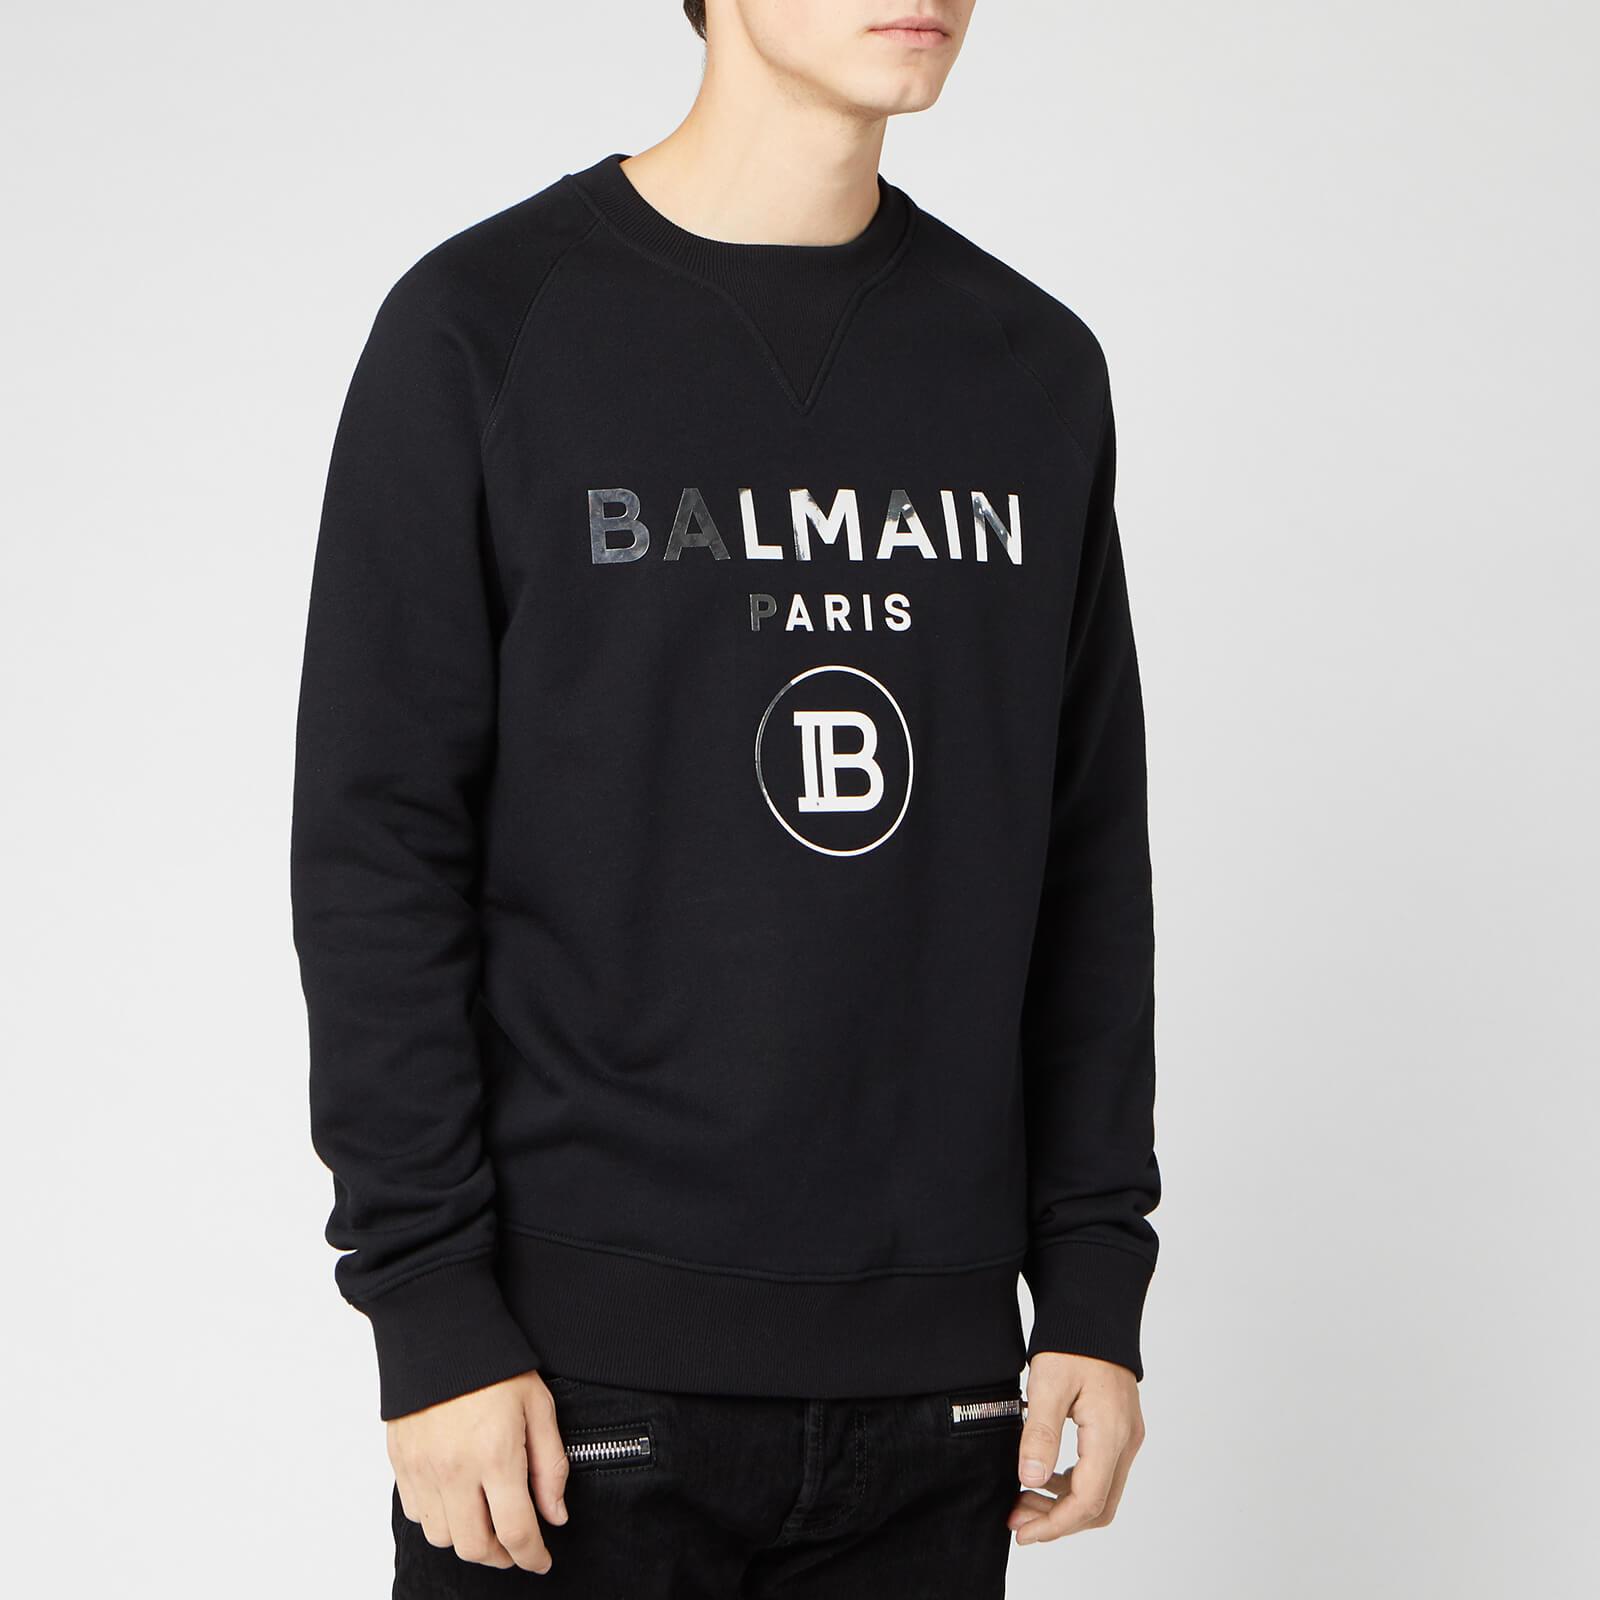 Balmain Sweatshirt in Black for Men - Lyst